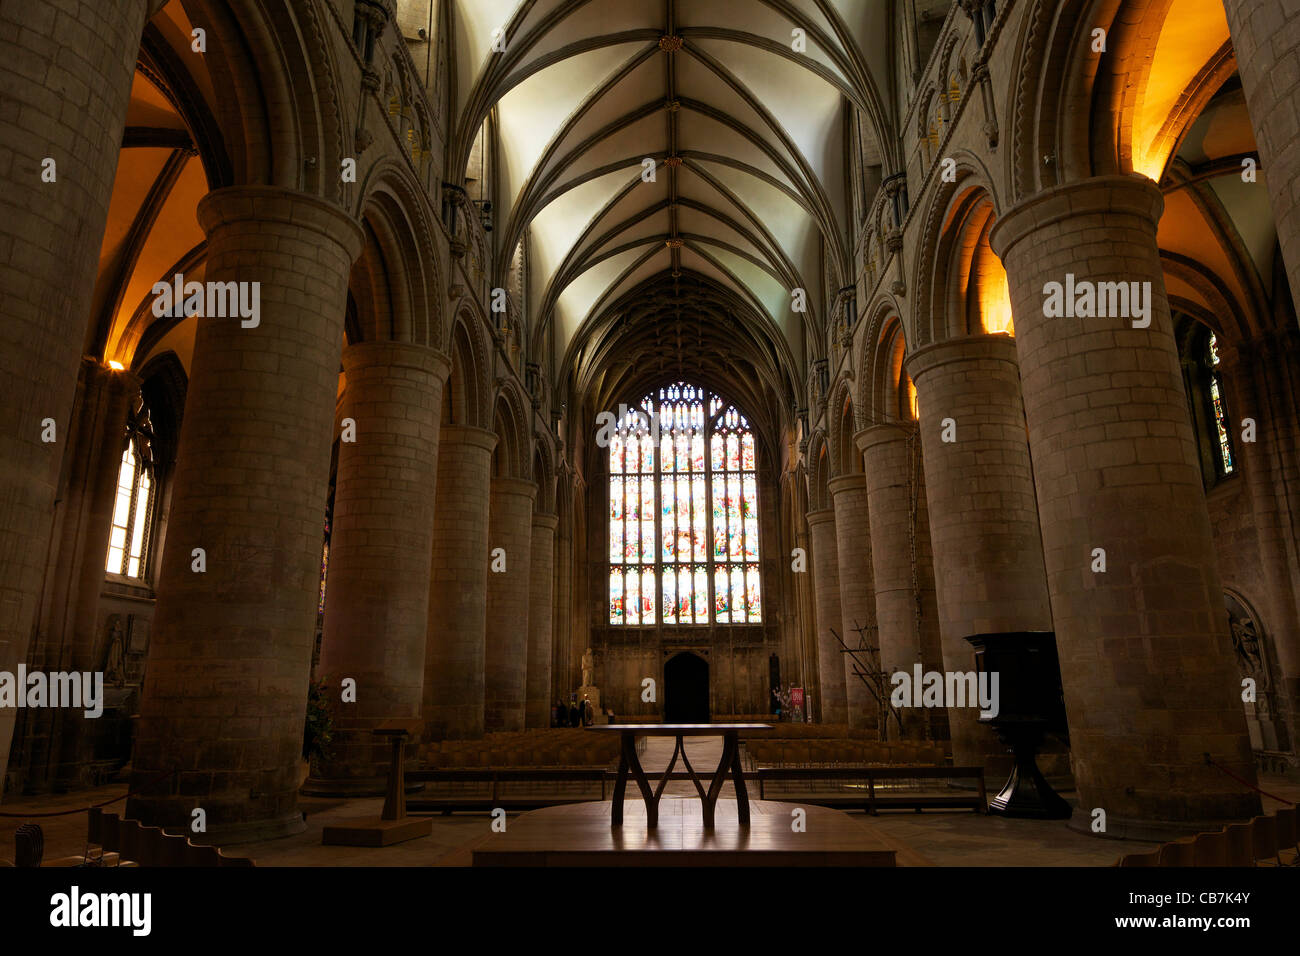 Nave románica del siglo XI, la catedral de Gloucester, Gloucestershire, Inglaterra, UK, Reino Unido, GB, Gran Bretaña Foto de stock